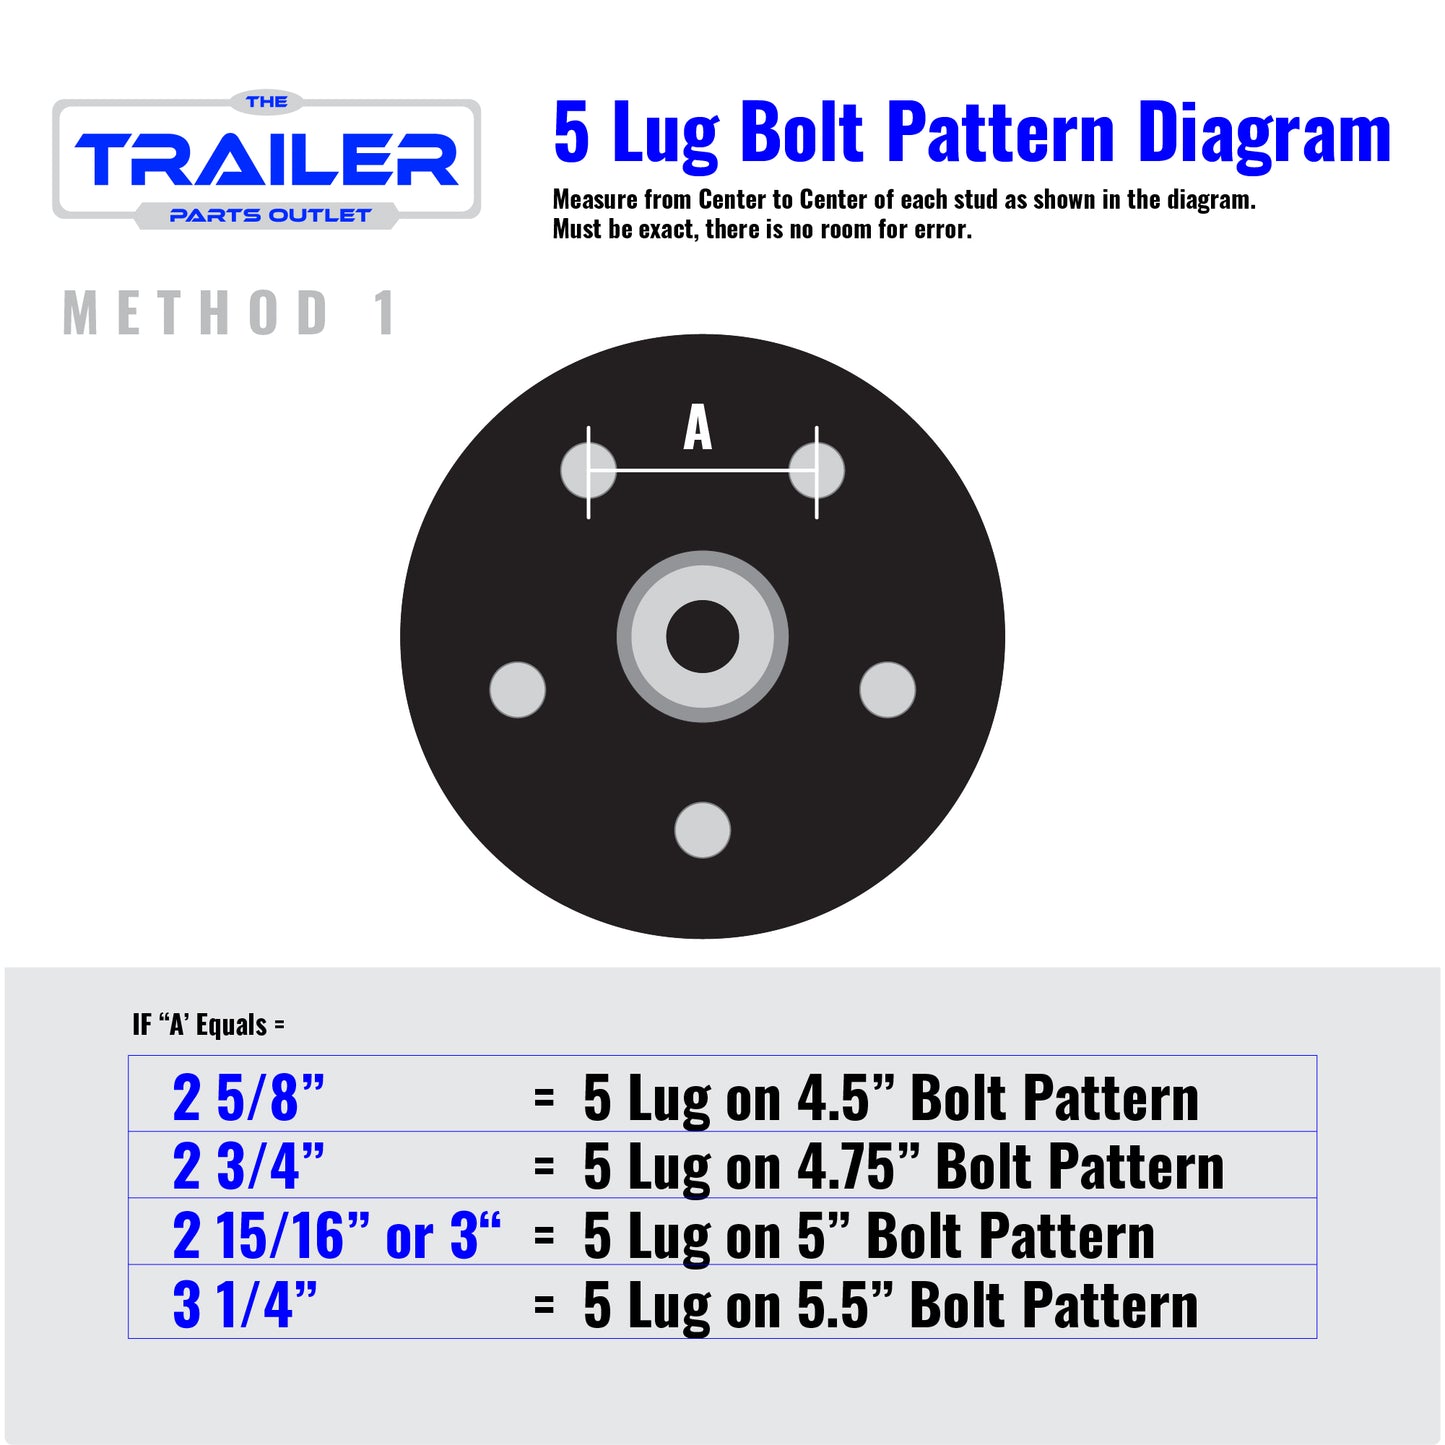 5 Lug Bolt Pattern Diagram- Method 1